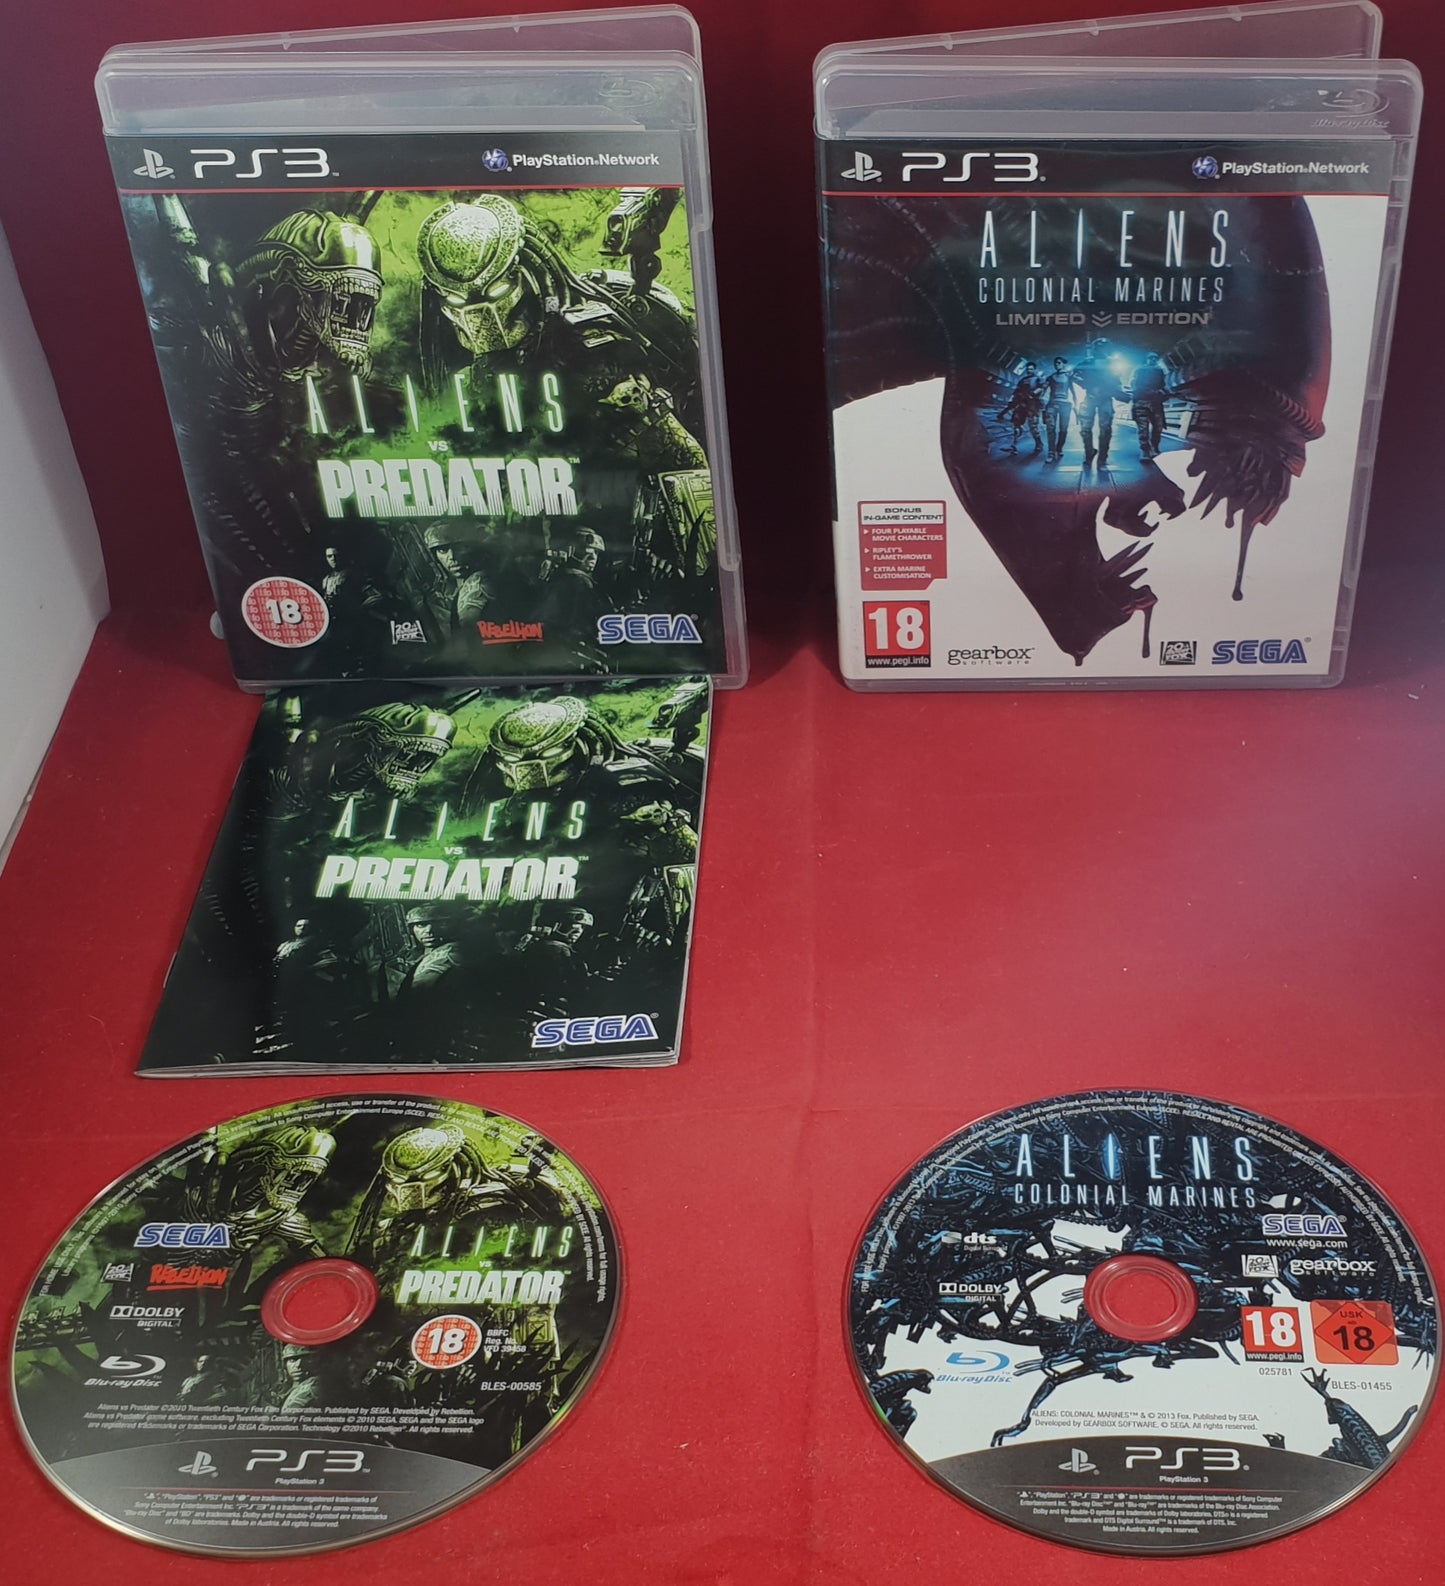 Aliens Vs Predator & Aliens Colonial Marines Sony Playstation 3 (PS3) Game Bundle